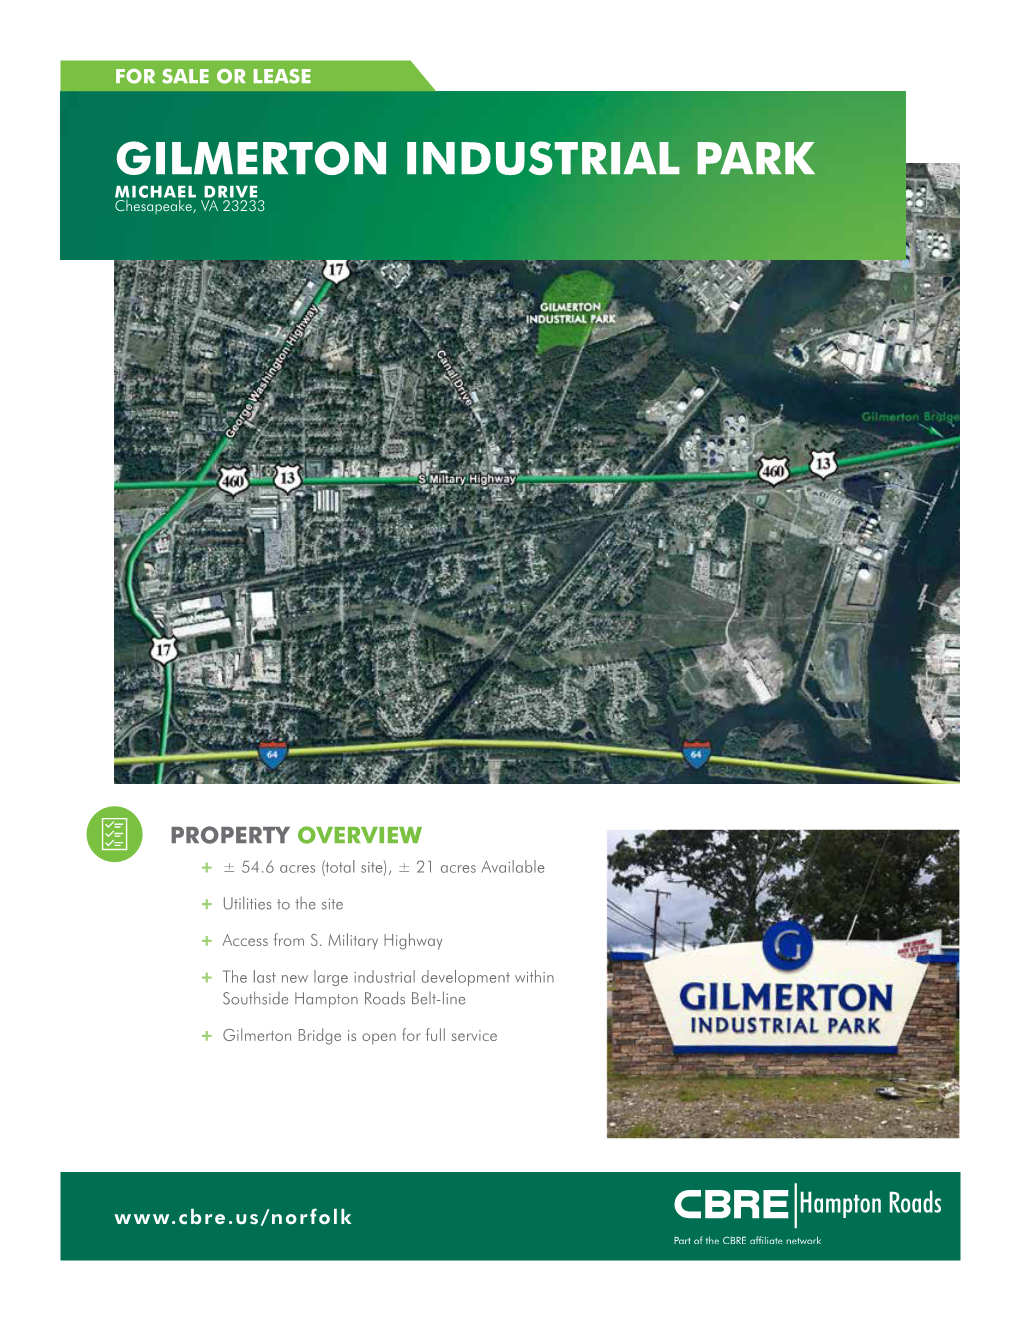 GILMERTON INDUSTRIAL PARK MICHAEL DRIVE Chesapeake, VA 23233